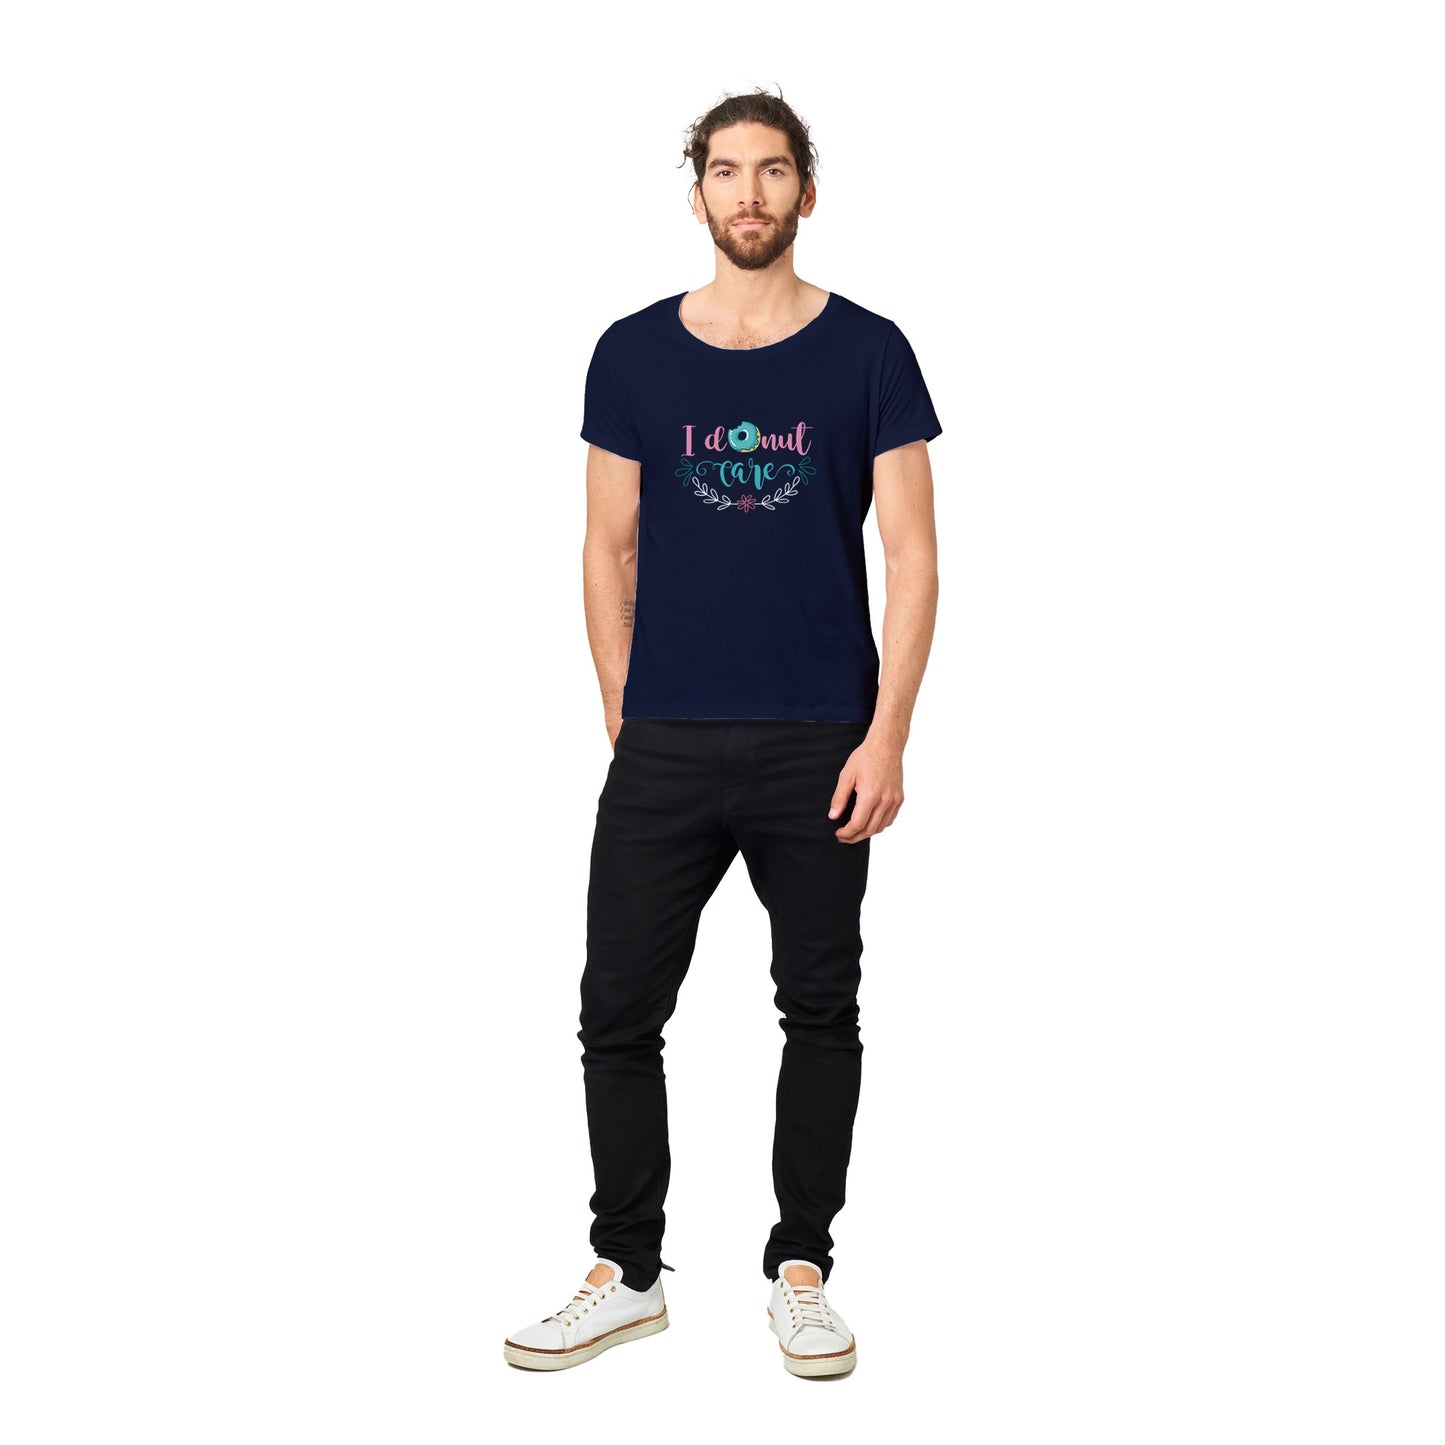 100% Organic Unisex T-shirt/I-Donut-Care